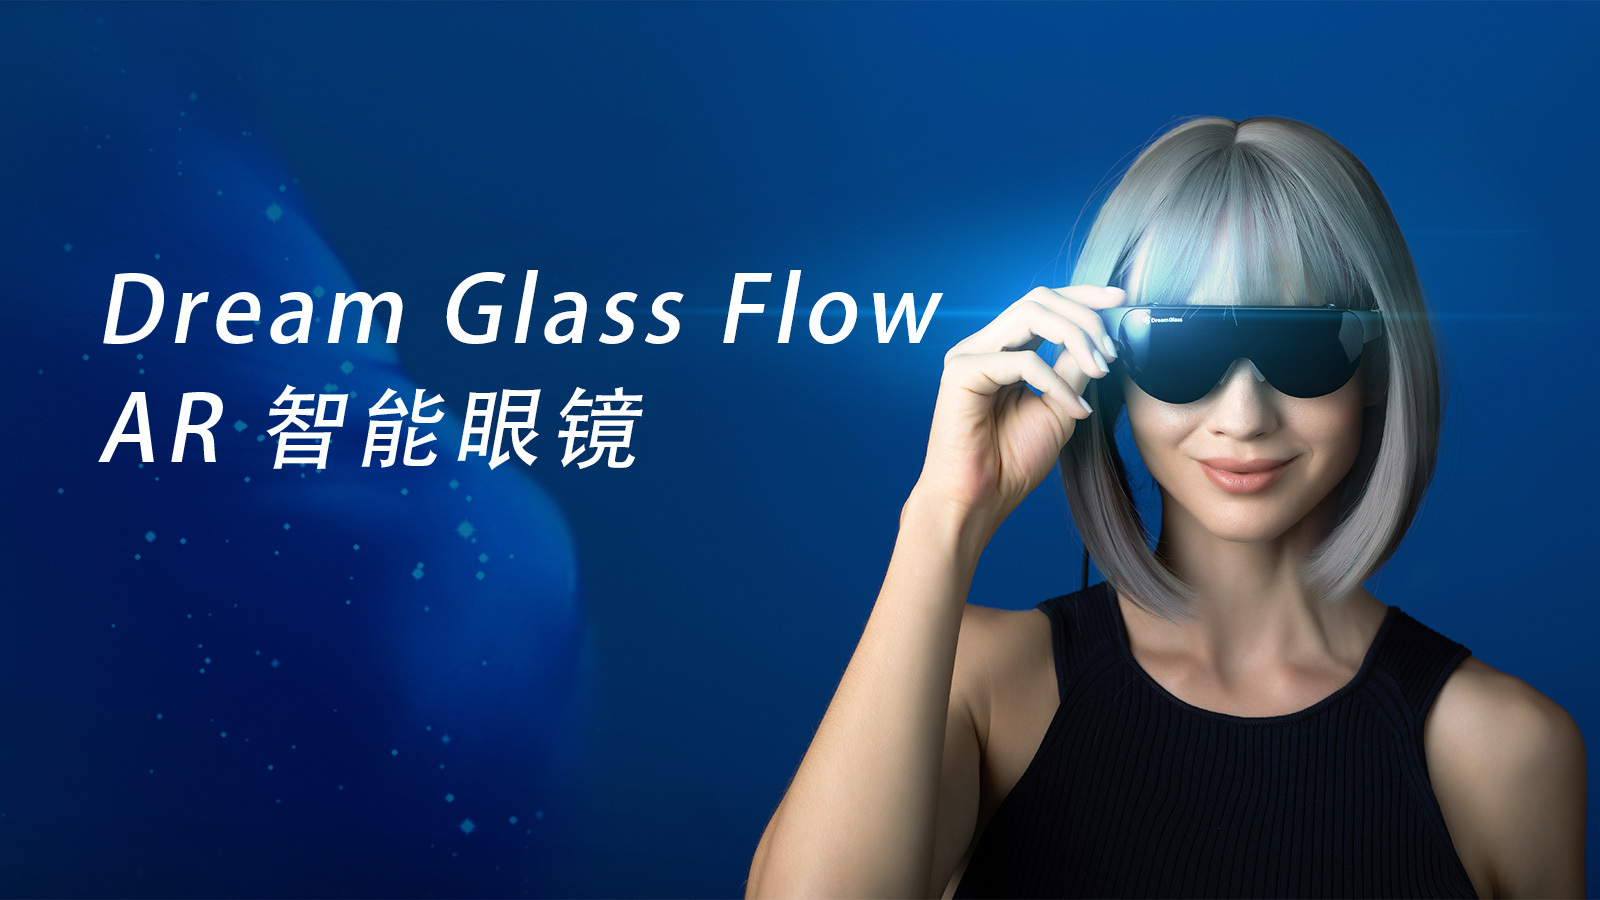 AR公司Dream Glass完成数千万元Pre-A轮战略融资